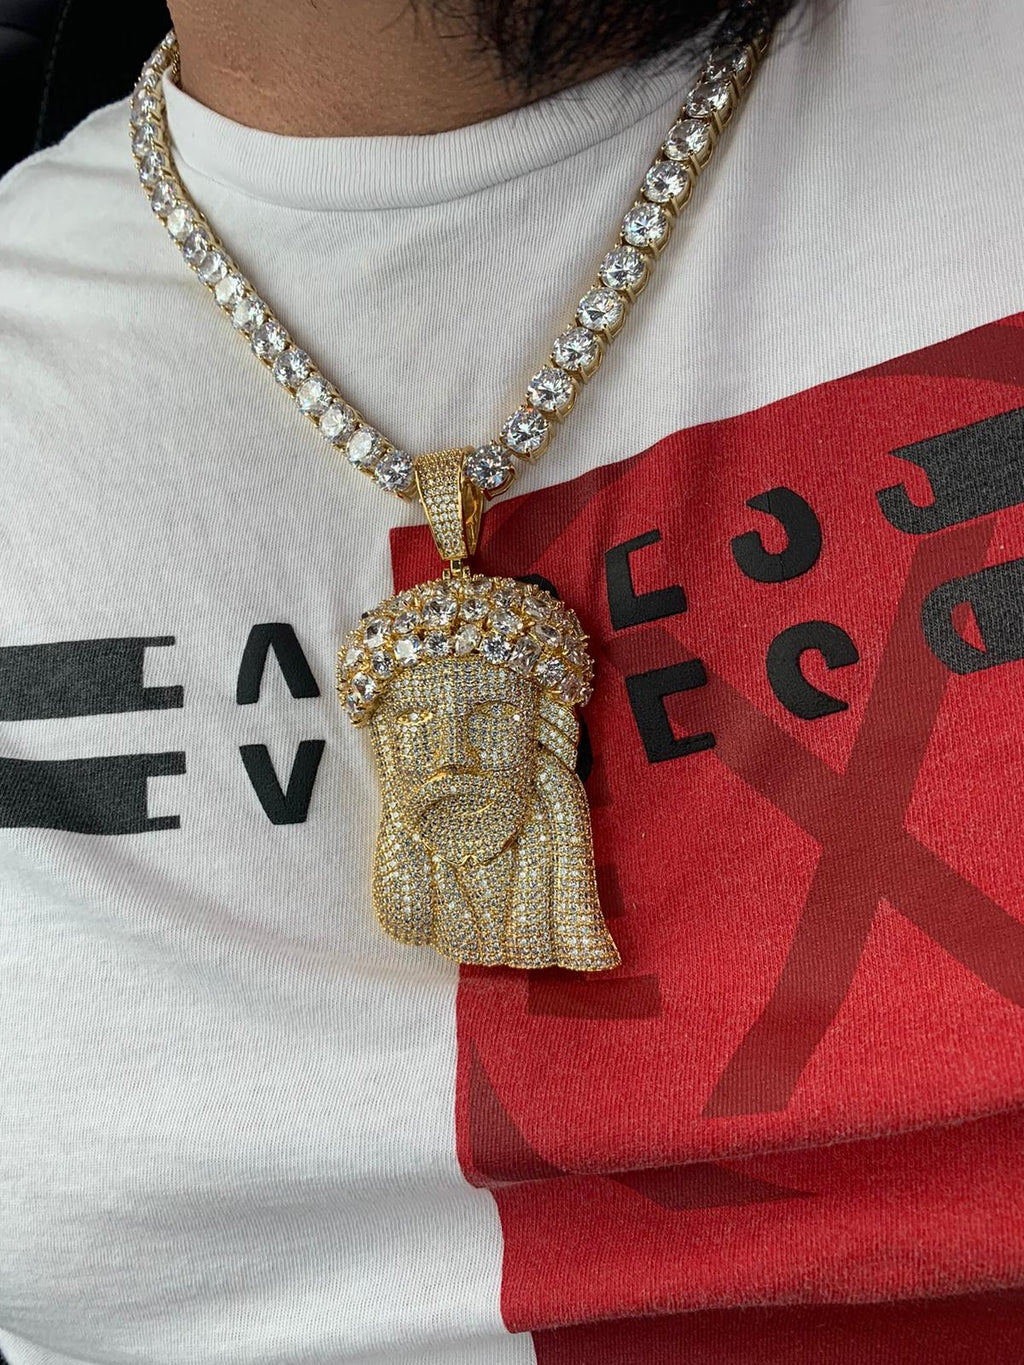 Jesus piece with tennis chain